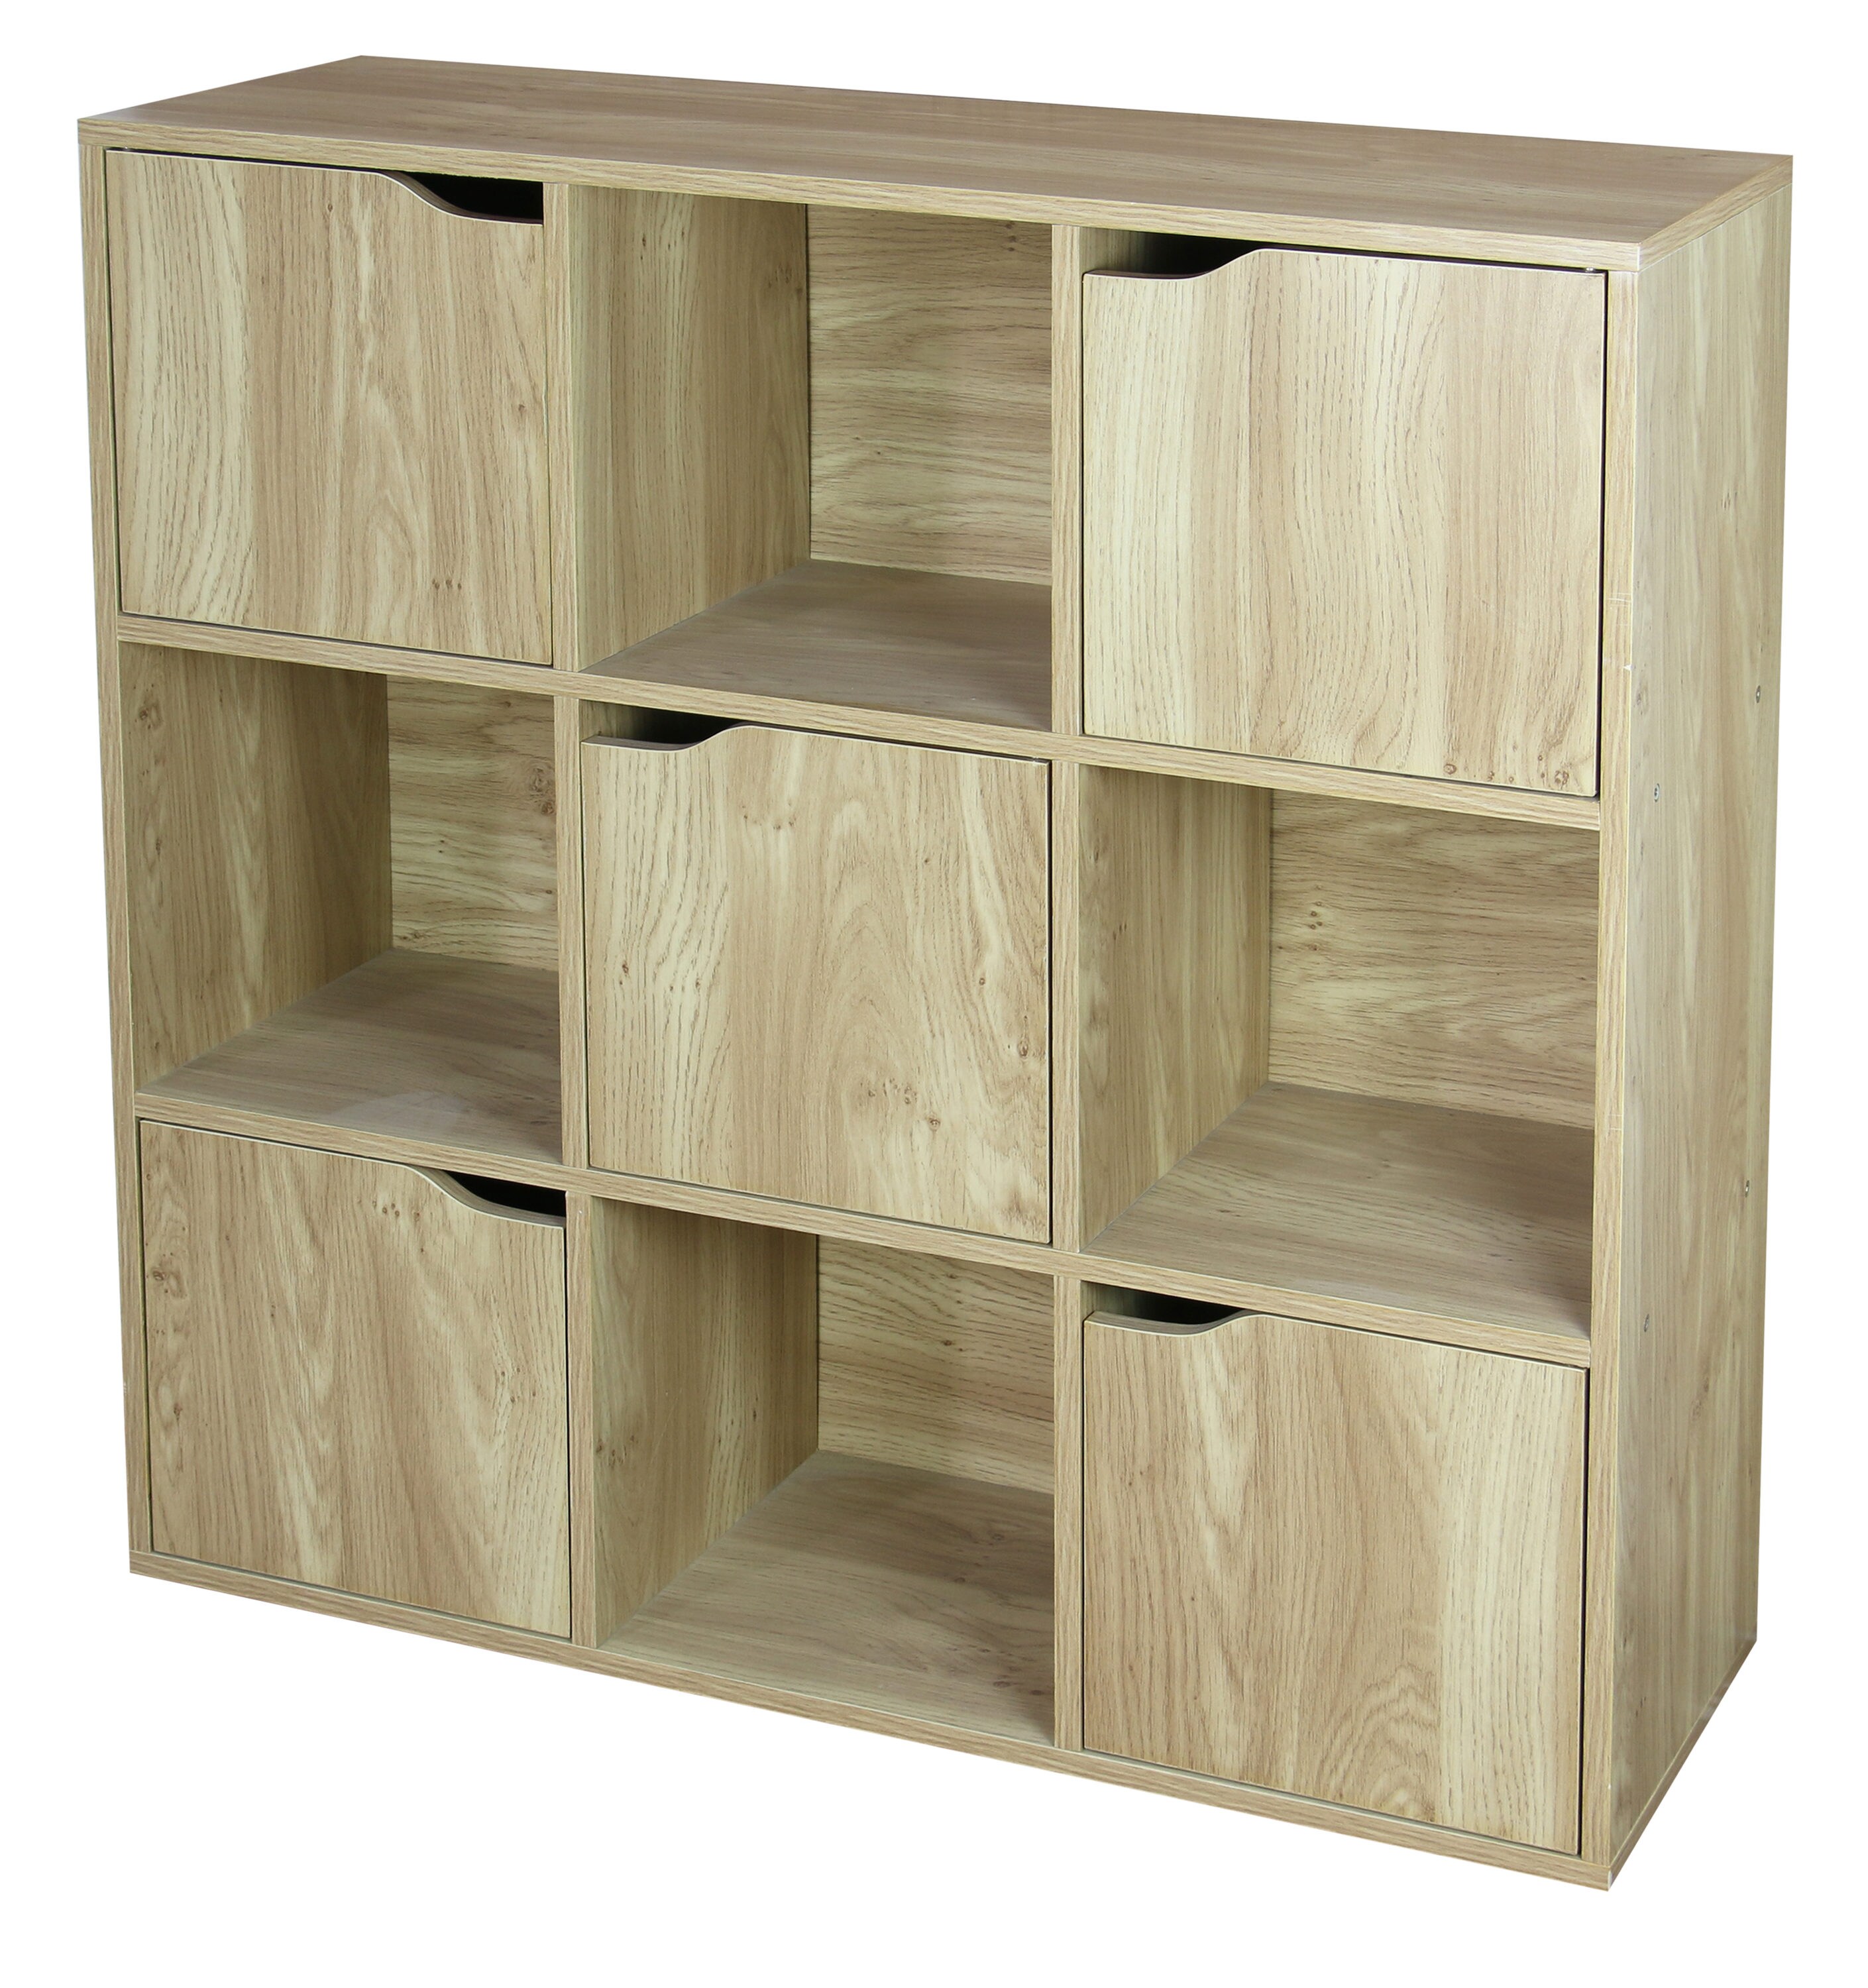 4 6 9 Cube Wooden Bookcase Shelving Display Shelves Storage Unit Wood Shelf Door 